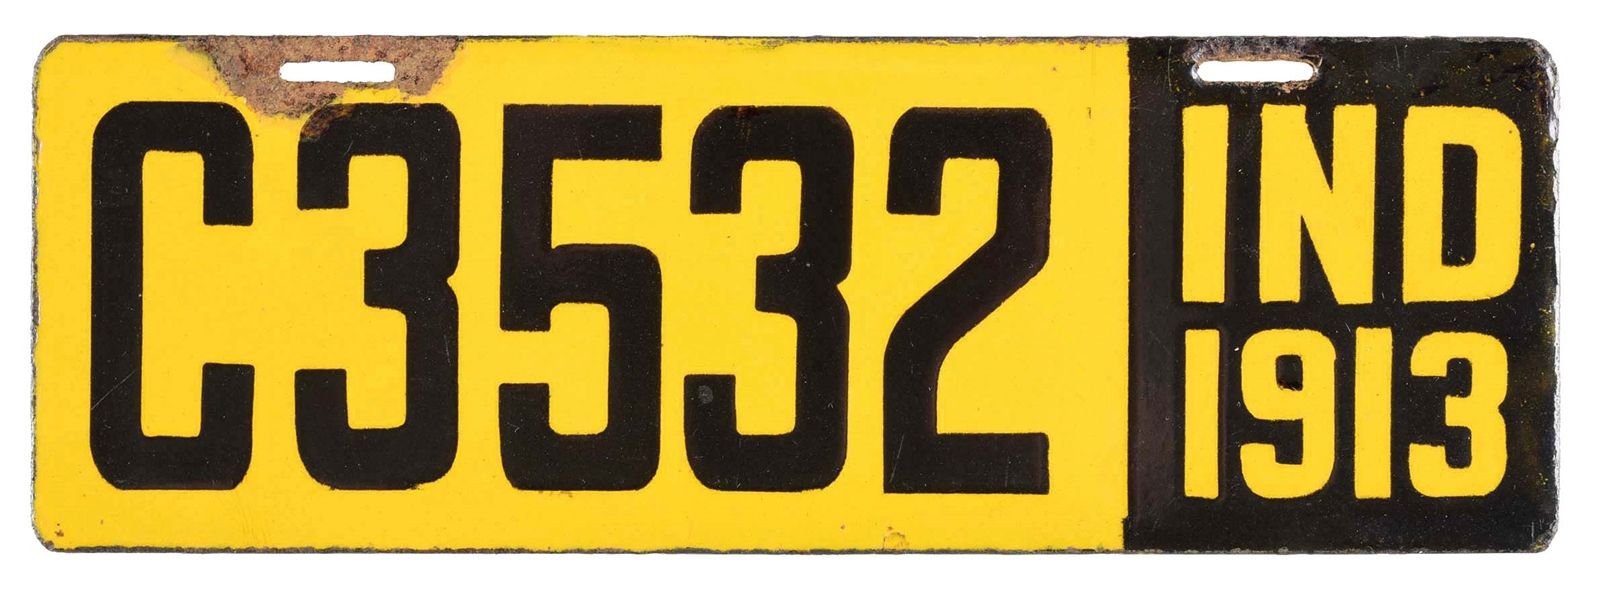 C3532 IND 1913 LICENSE PLATE.